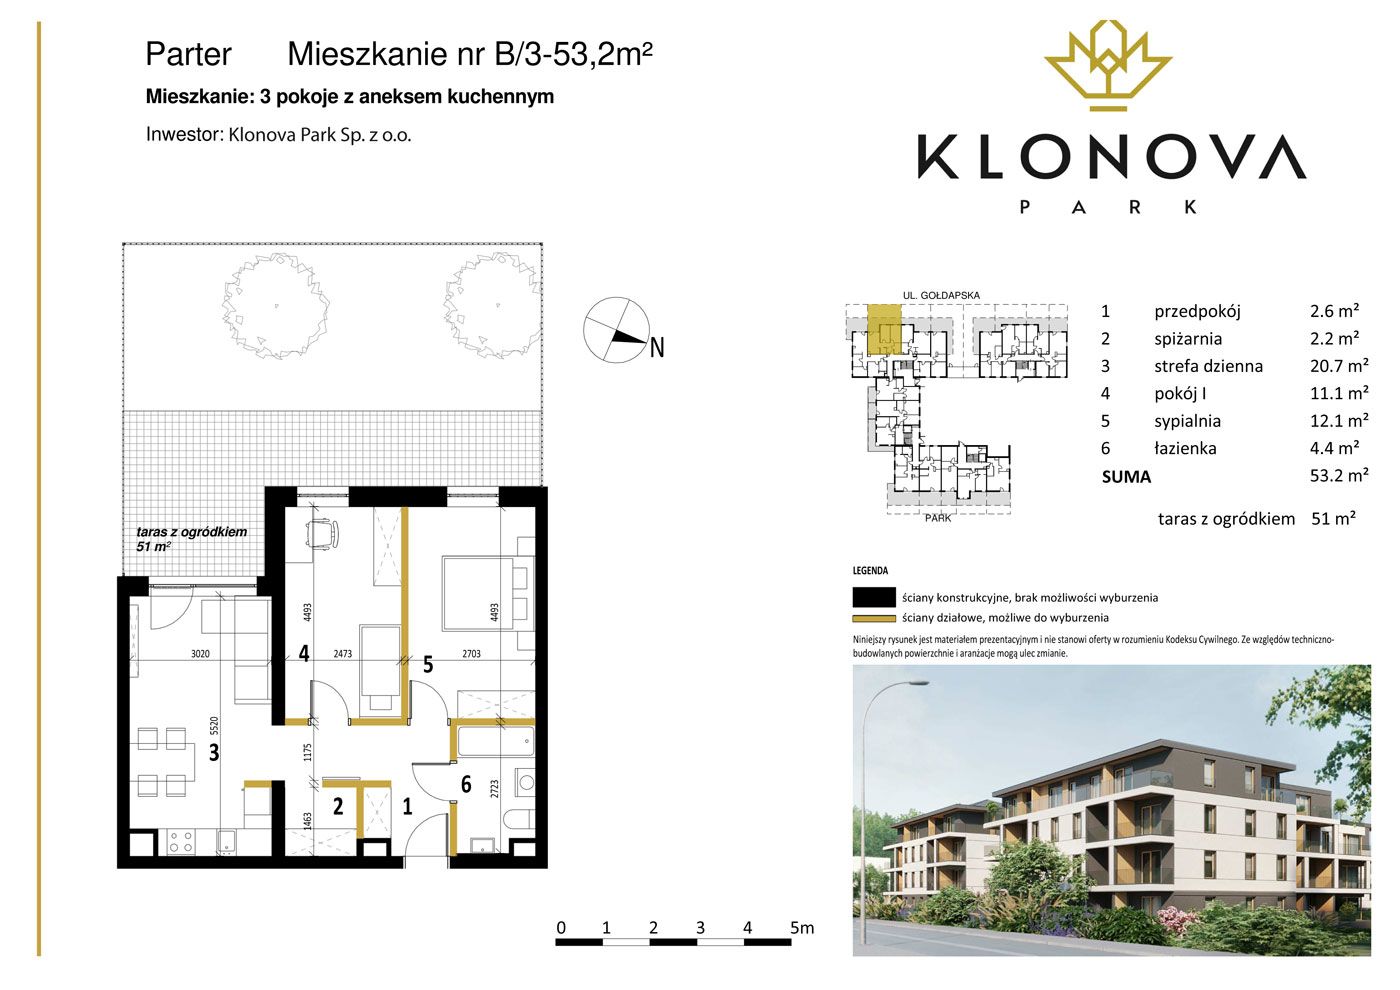 Apartamenty Klonova Park - Plan mieszkania B/3